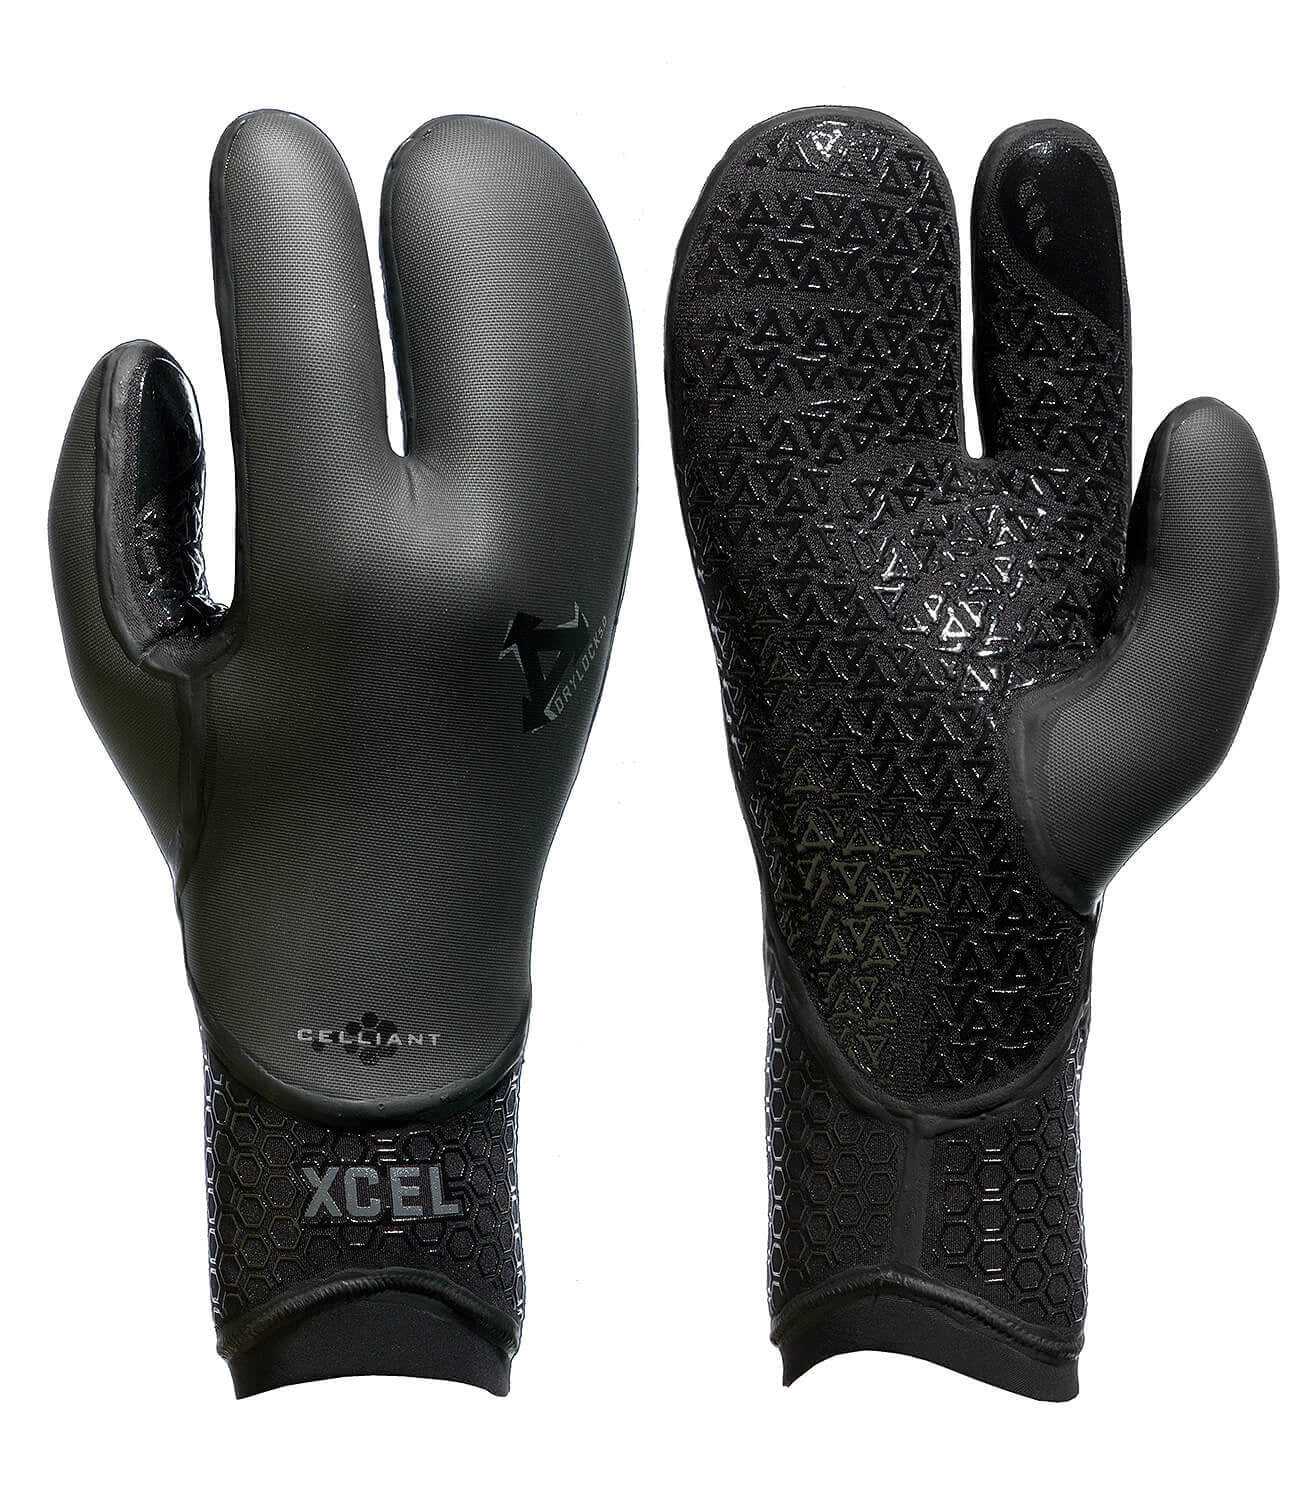 5mm XCEL DRYLOCK Wetsuit Gloves